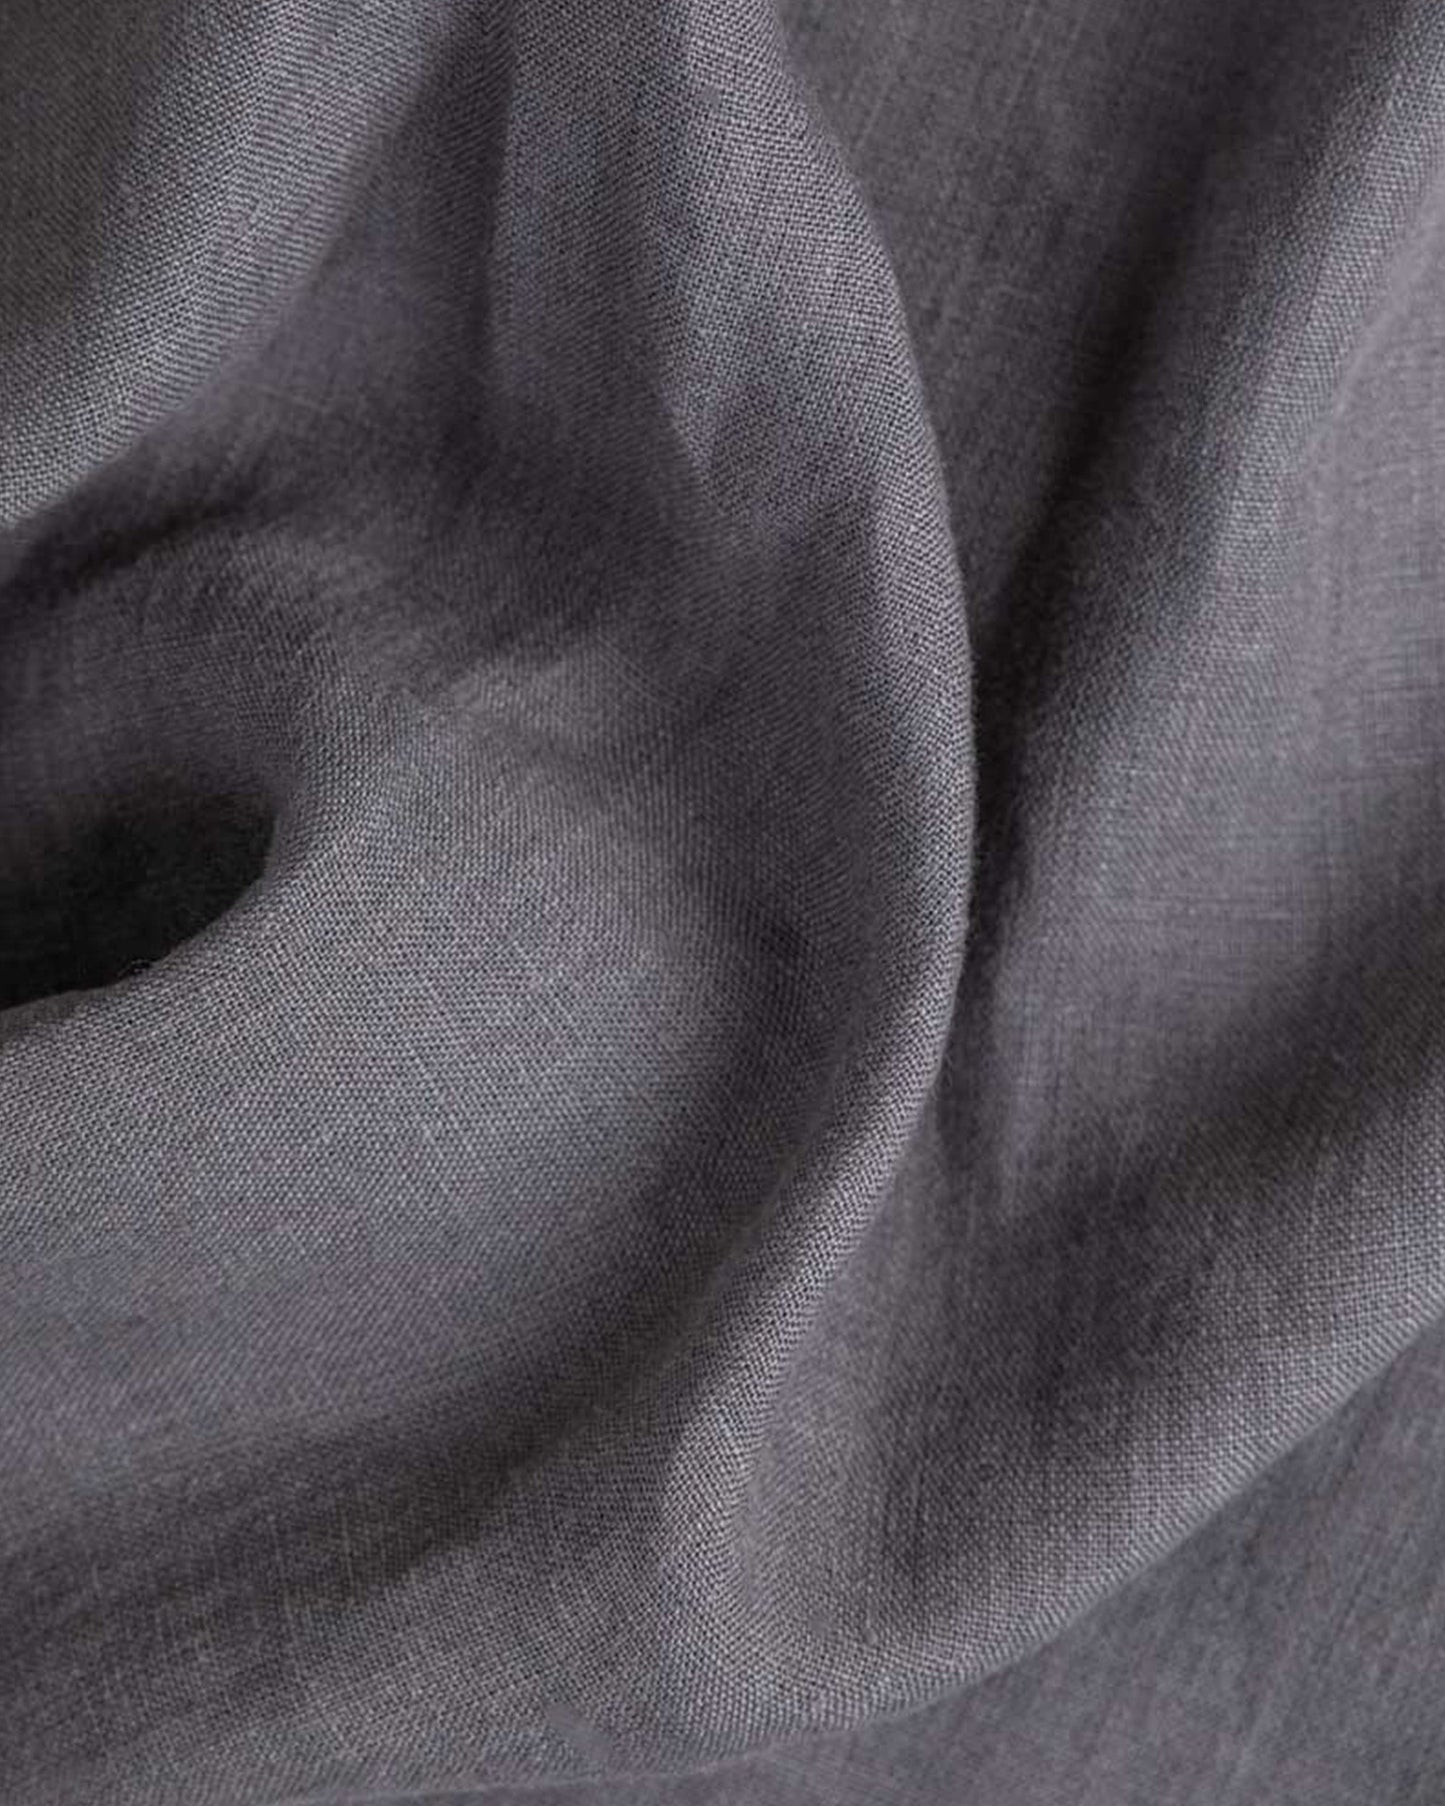 Charcoal gray linen duvet cover set (3 pcs) - MagicLinen